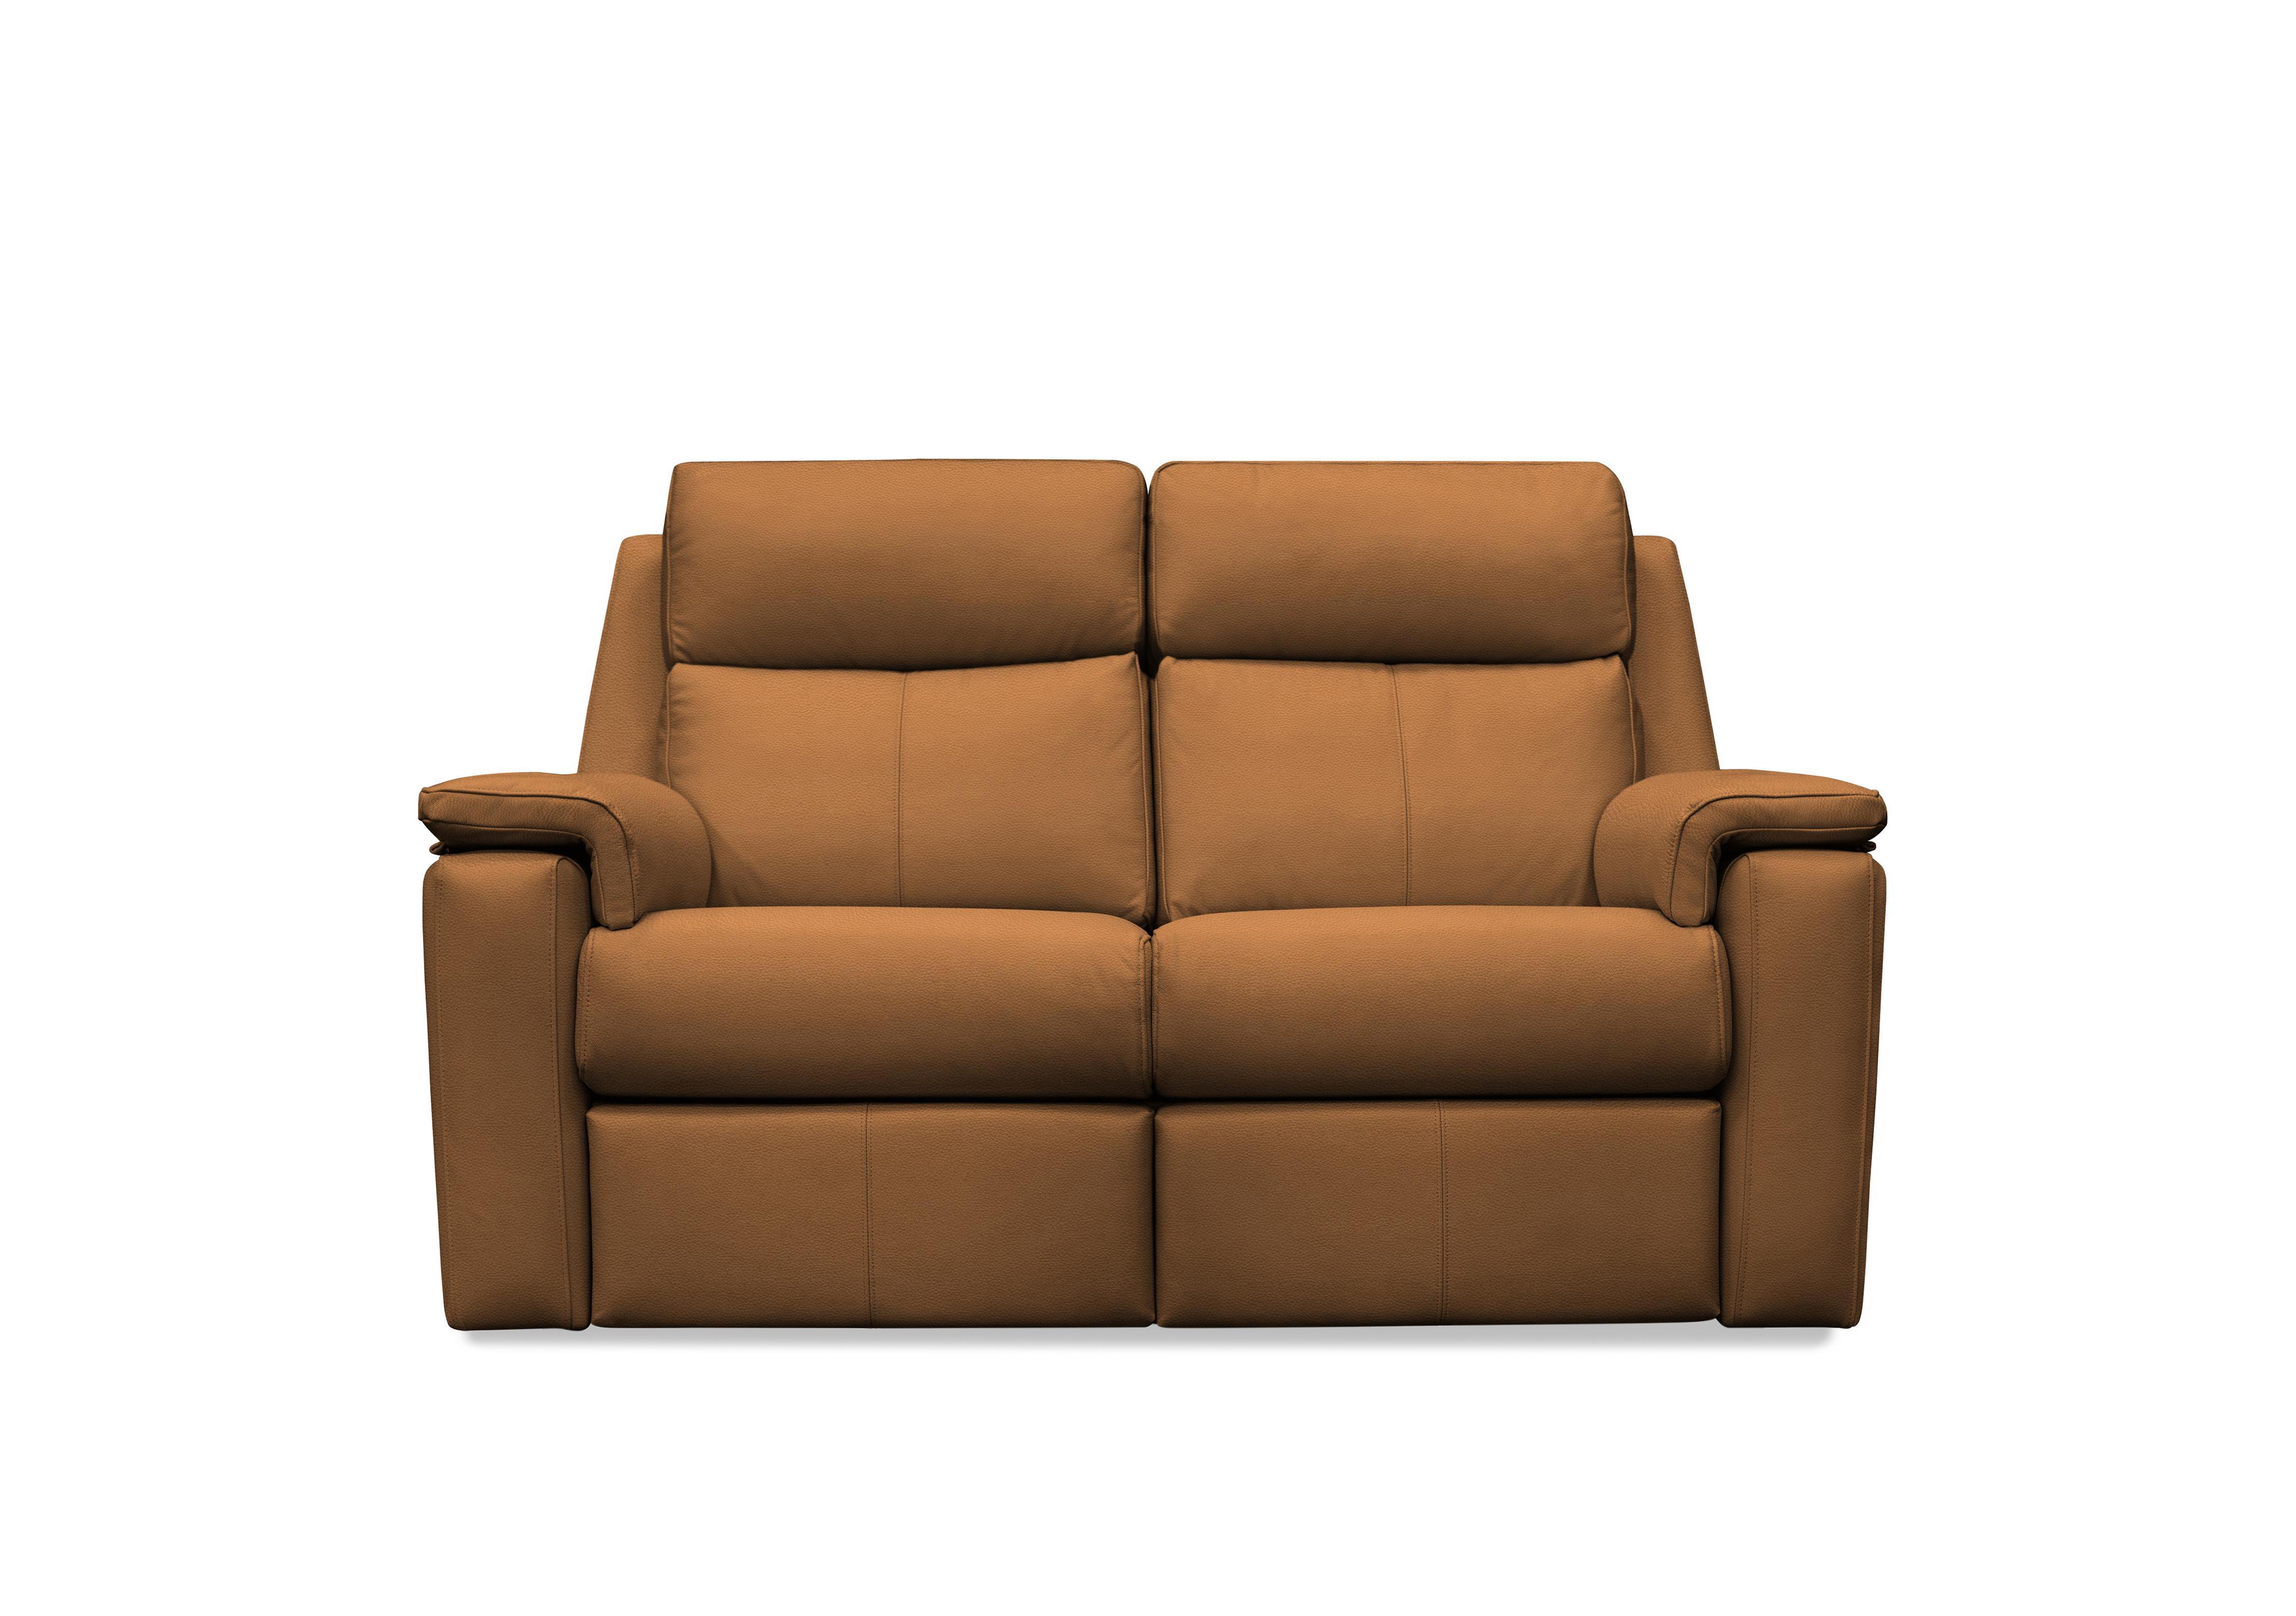 Thornbury 2 Seater Leather Sofa in L847 Cambridge Tan on Furniture Village